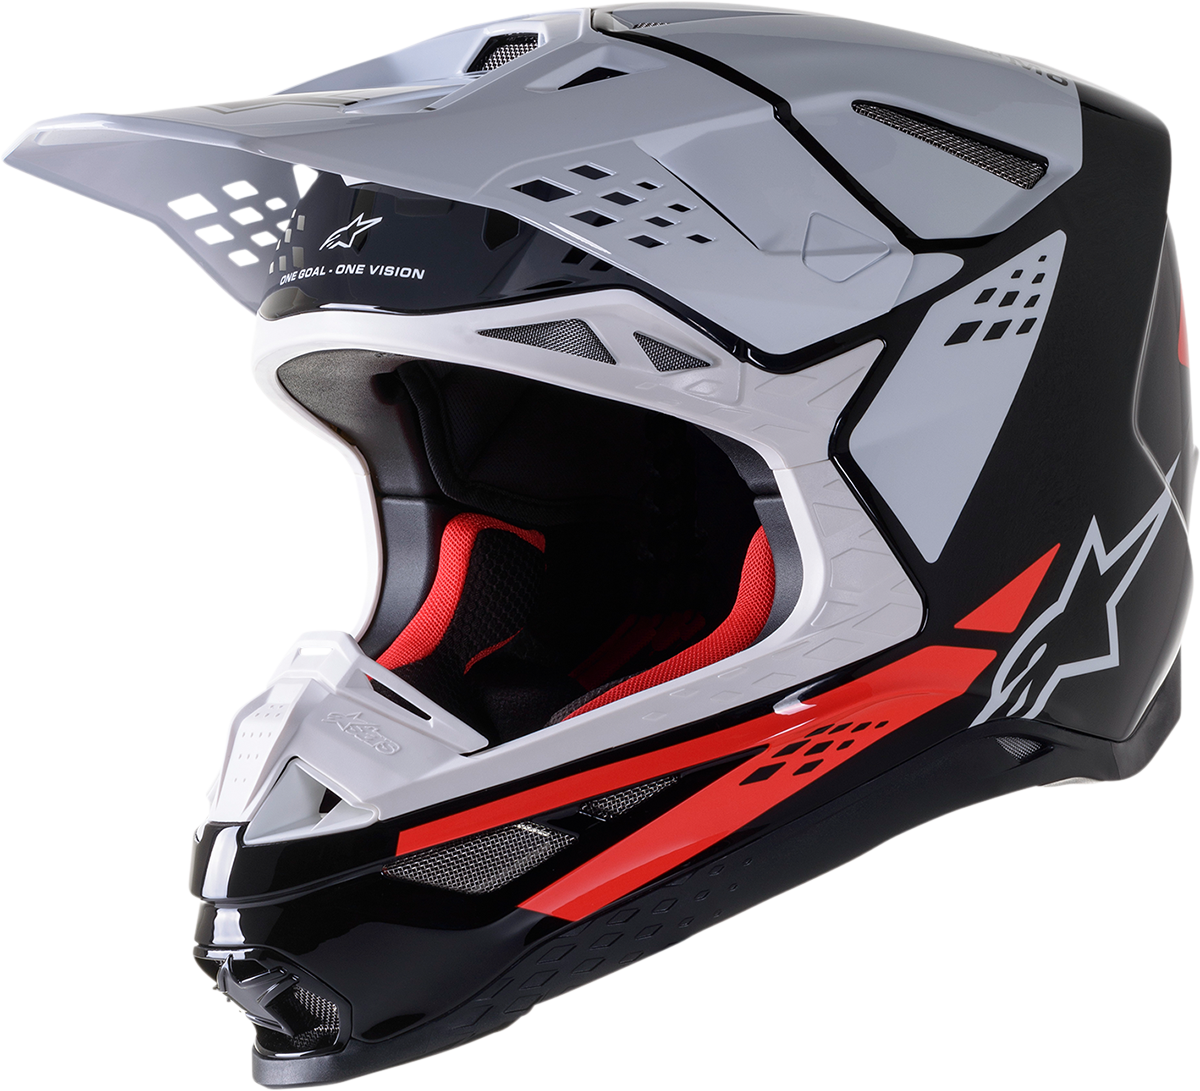 ALPINESTARS Supertech M8 Helmet - Factory - Black/White/Red - XL 8302922-1233-XL